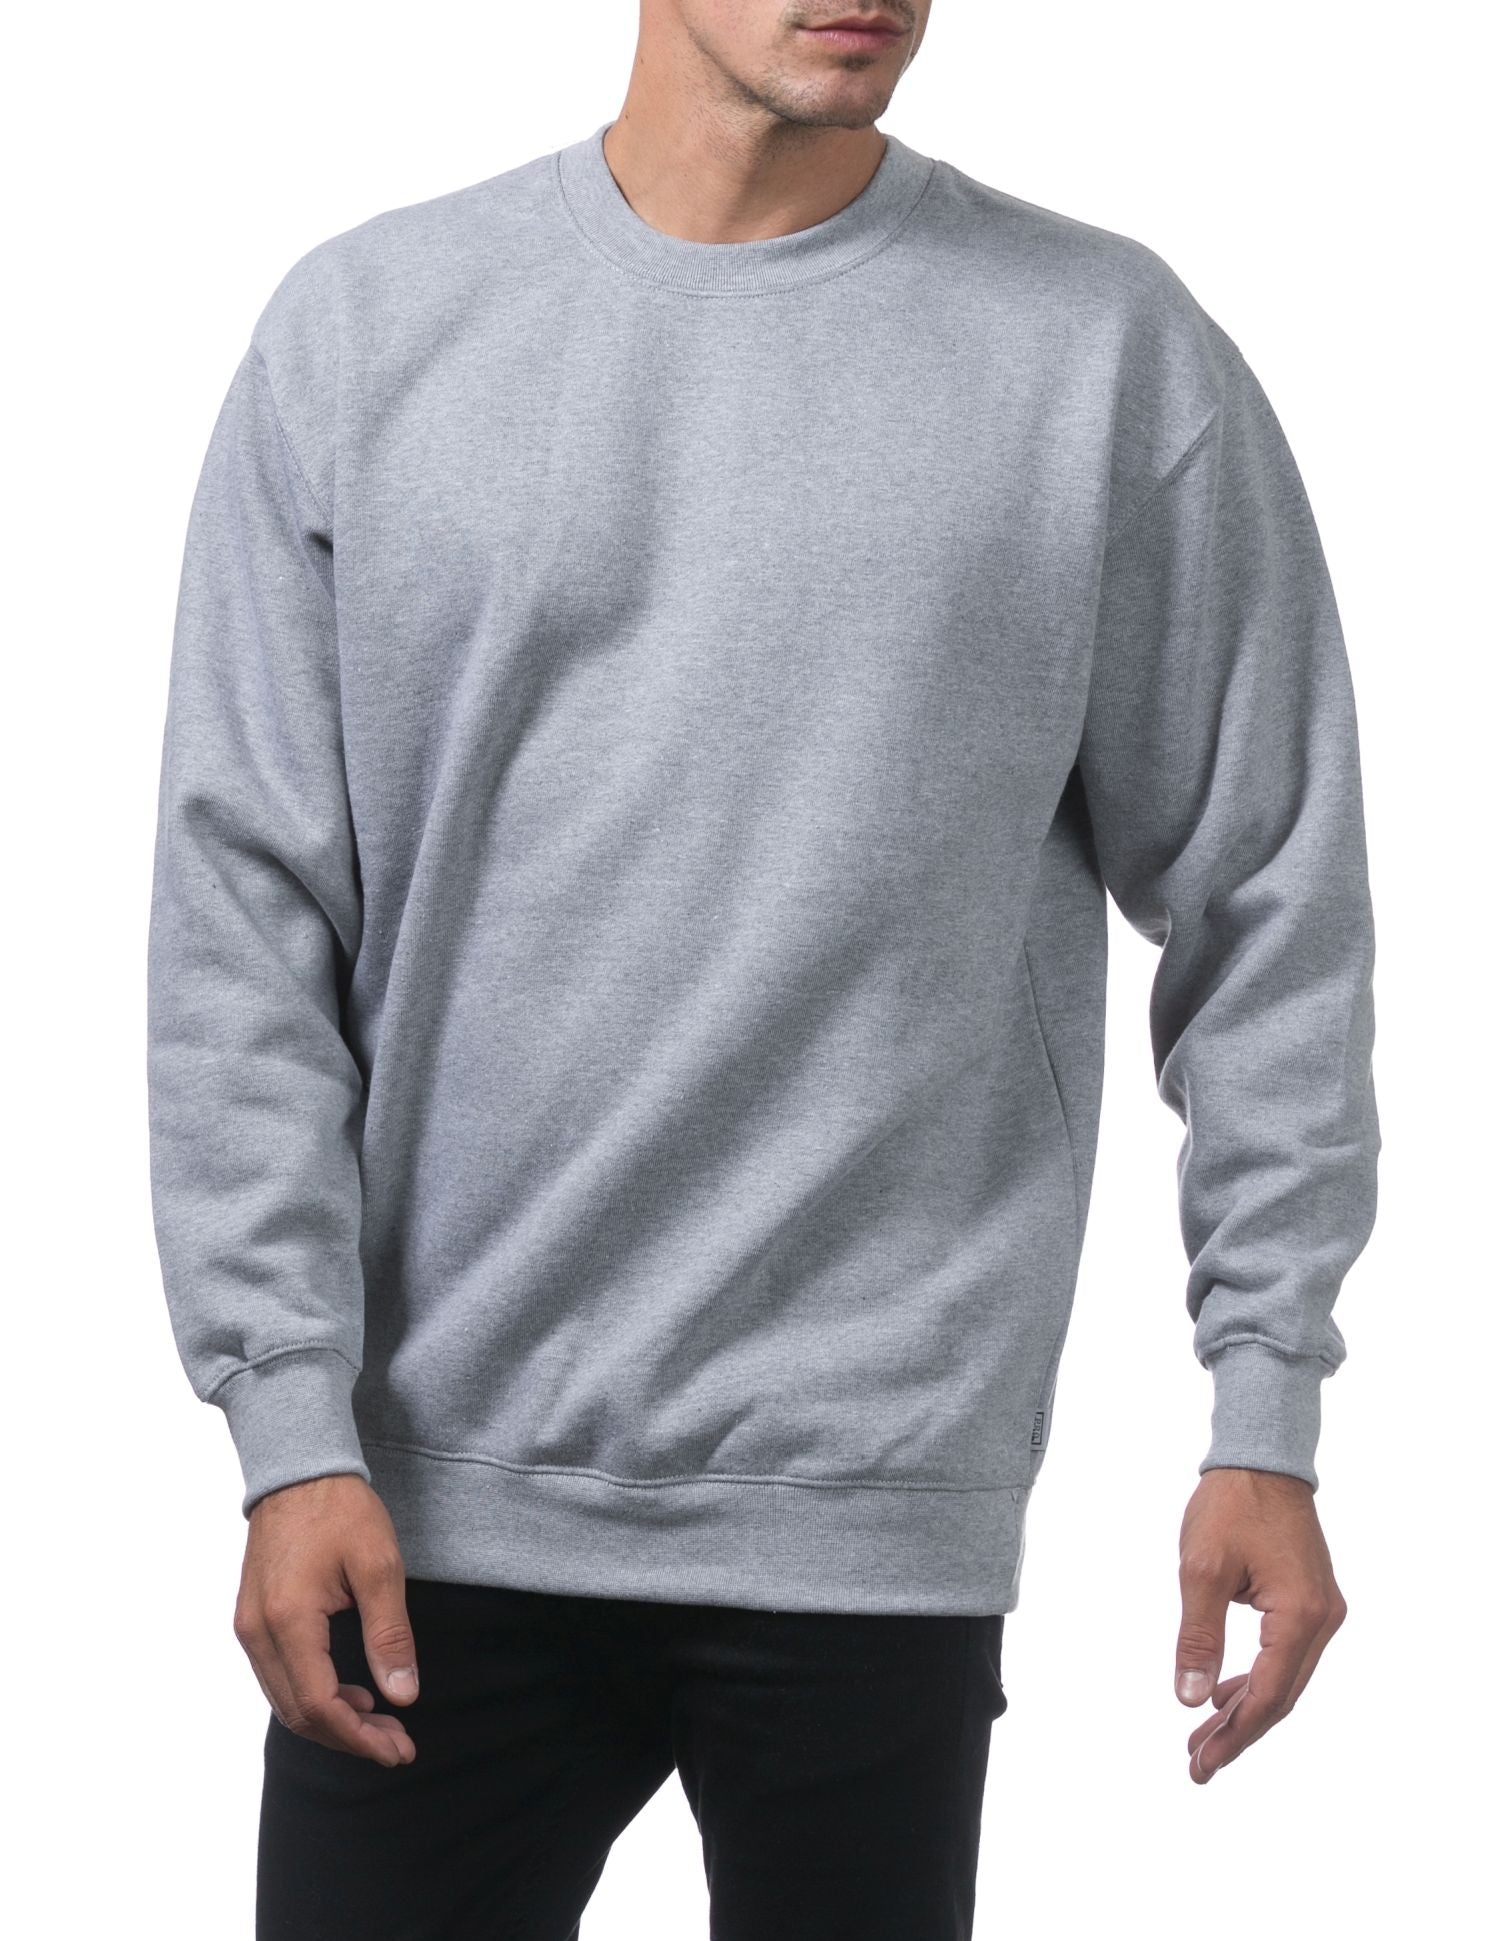 Pro Club Men's Comfort Crew Neck Fleece Pullover Sweater - Heather Gray - Small - Pro-Distributing